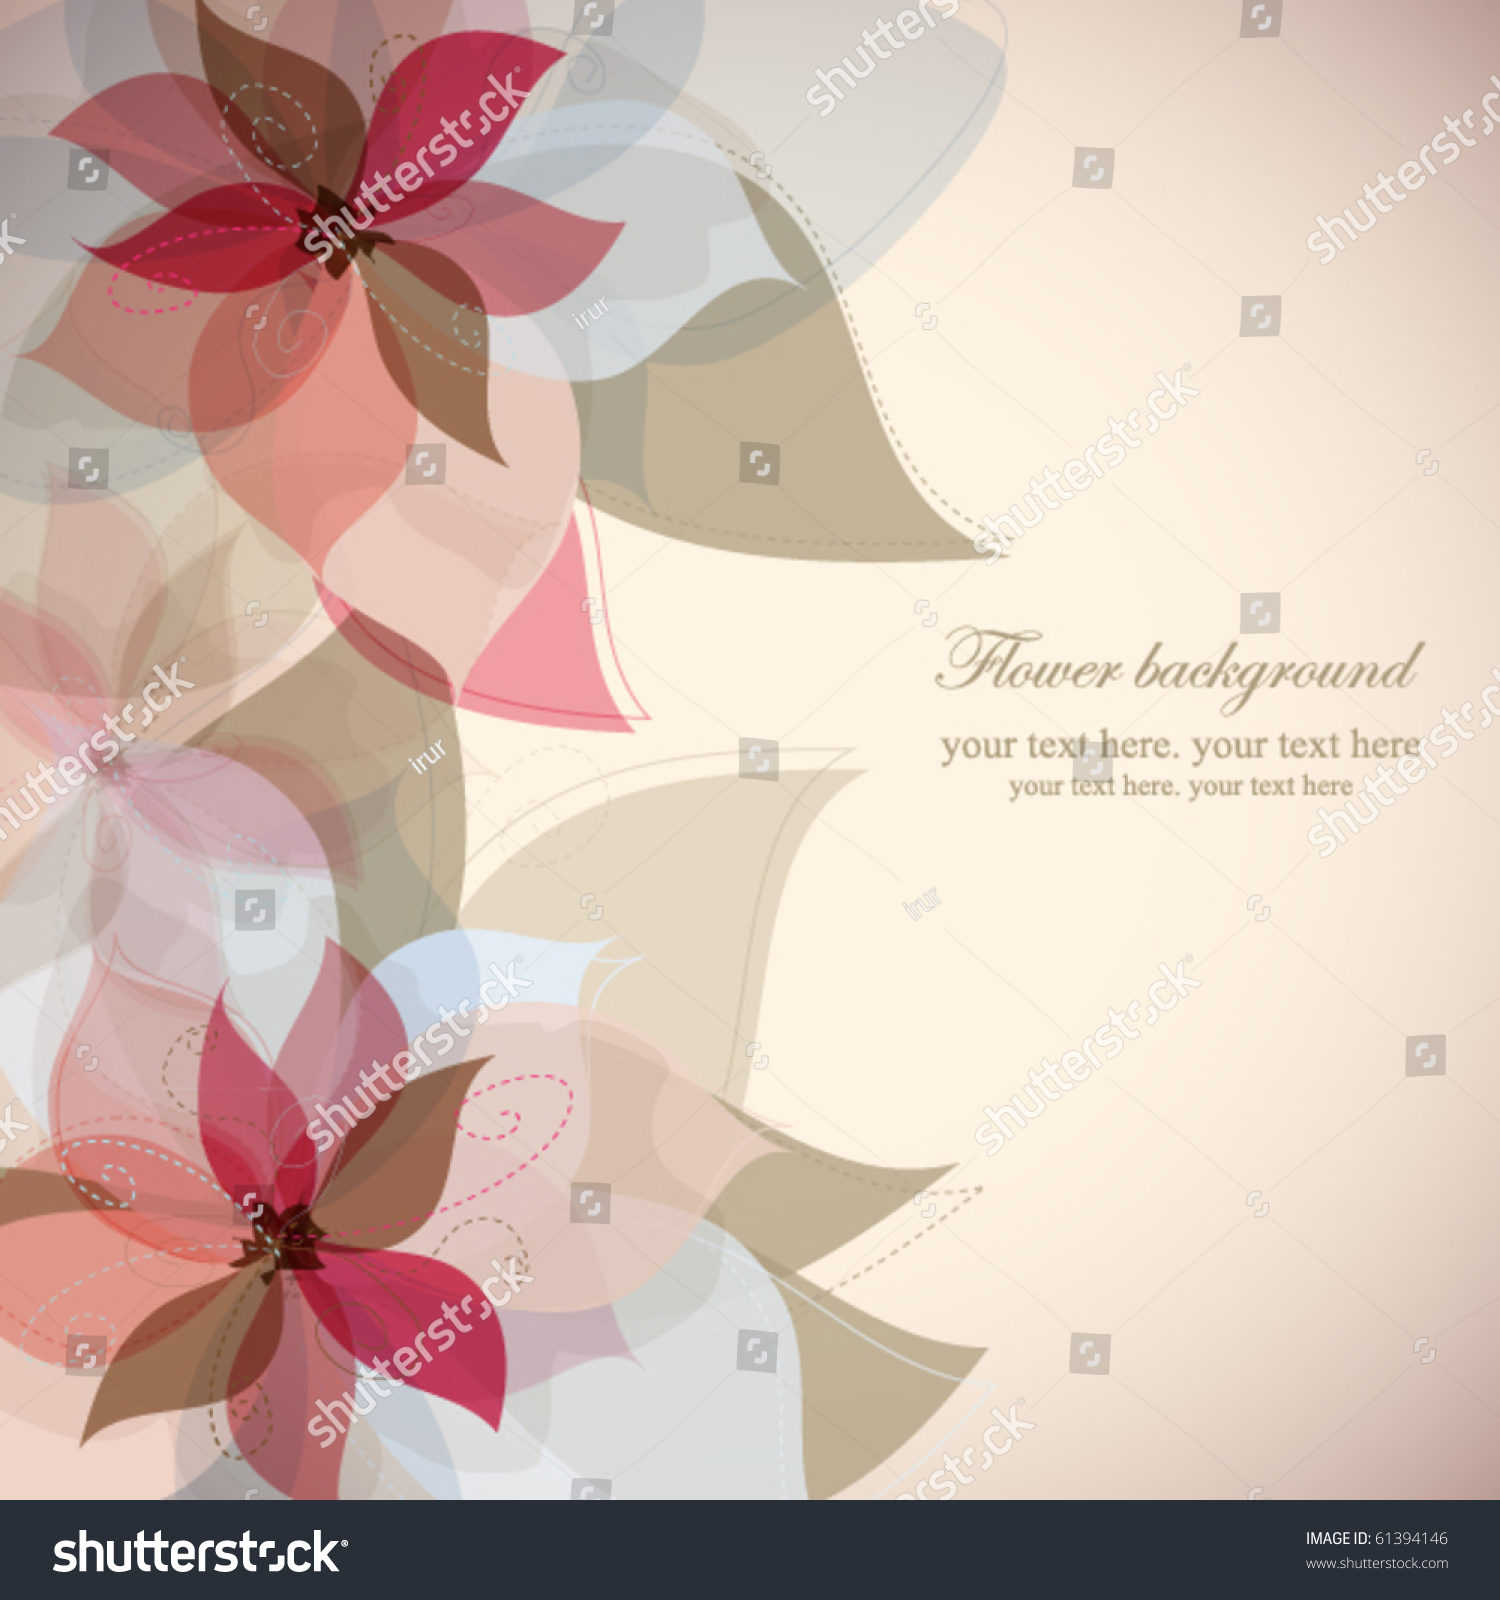 Vector Flower Background - 61394146 : Shutterstock